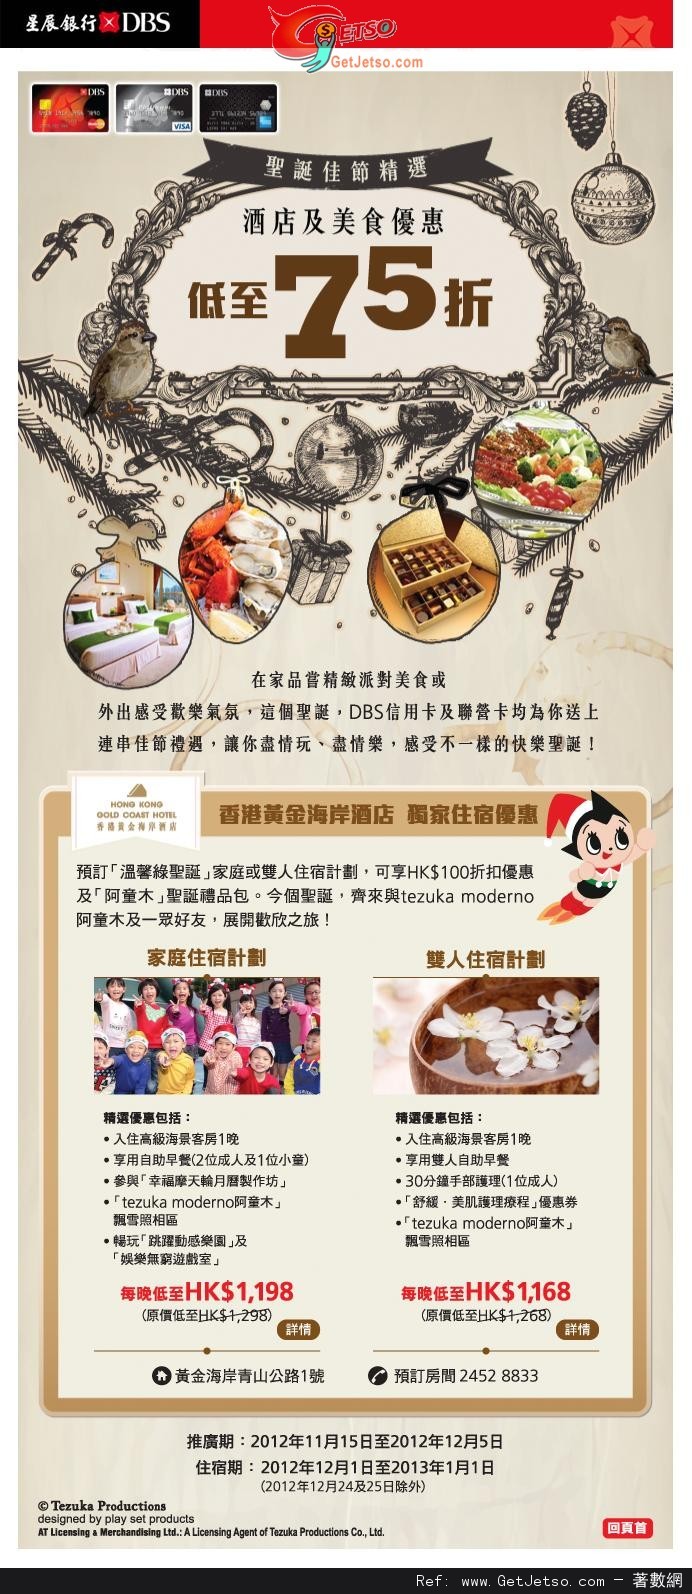 DBS信用卡享香港黃金海岸酒店聖誕住宿套票優惠(至12年12月5日)圖片1